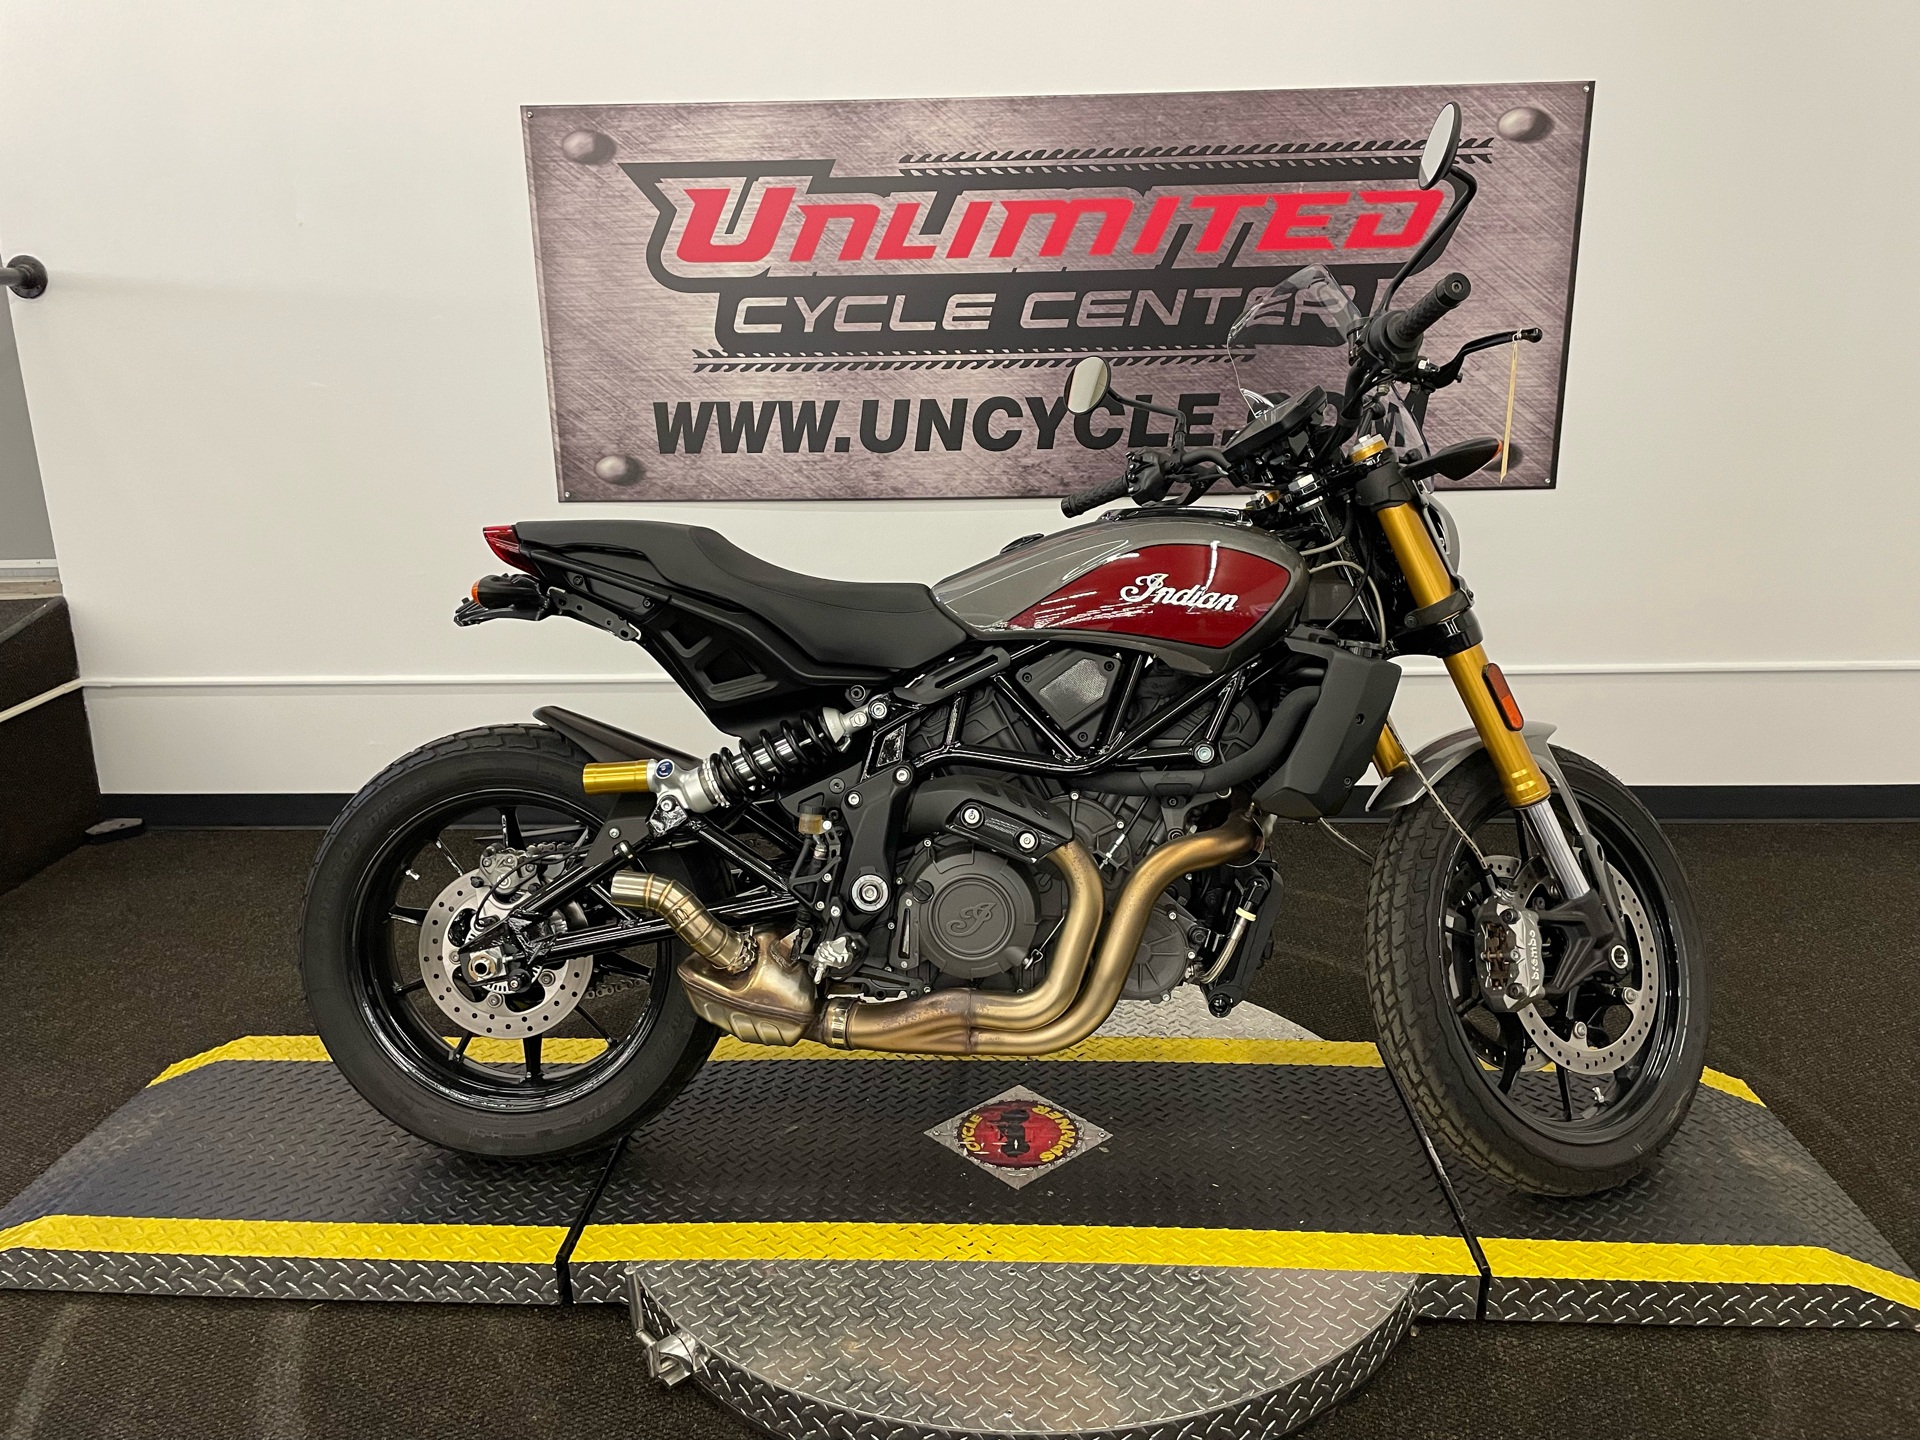 2019 Indian Motorcycle FTR™ 1200 S in Tyrone, Pennsylvania - Photo 2